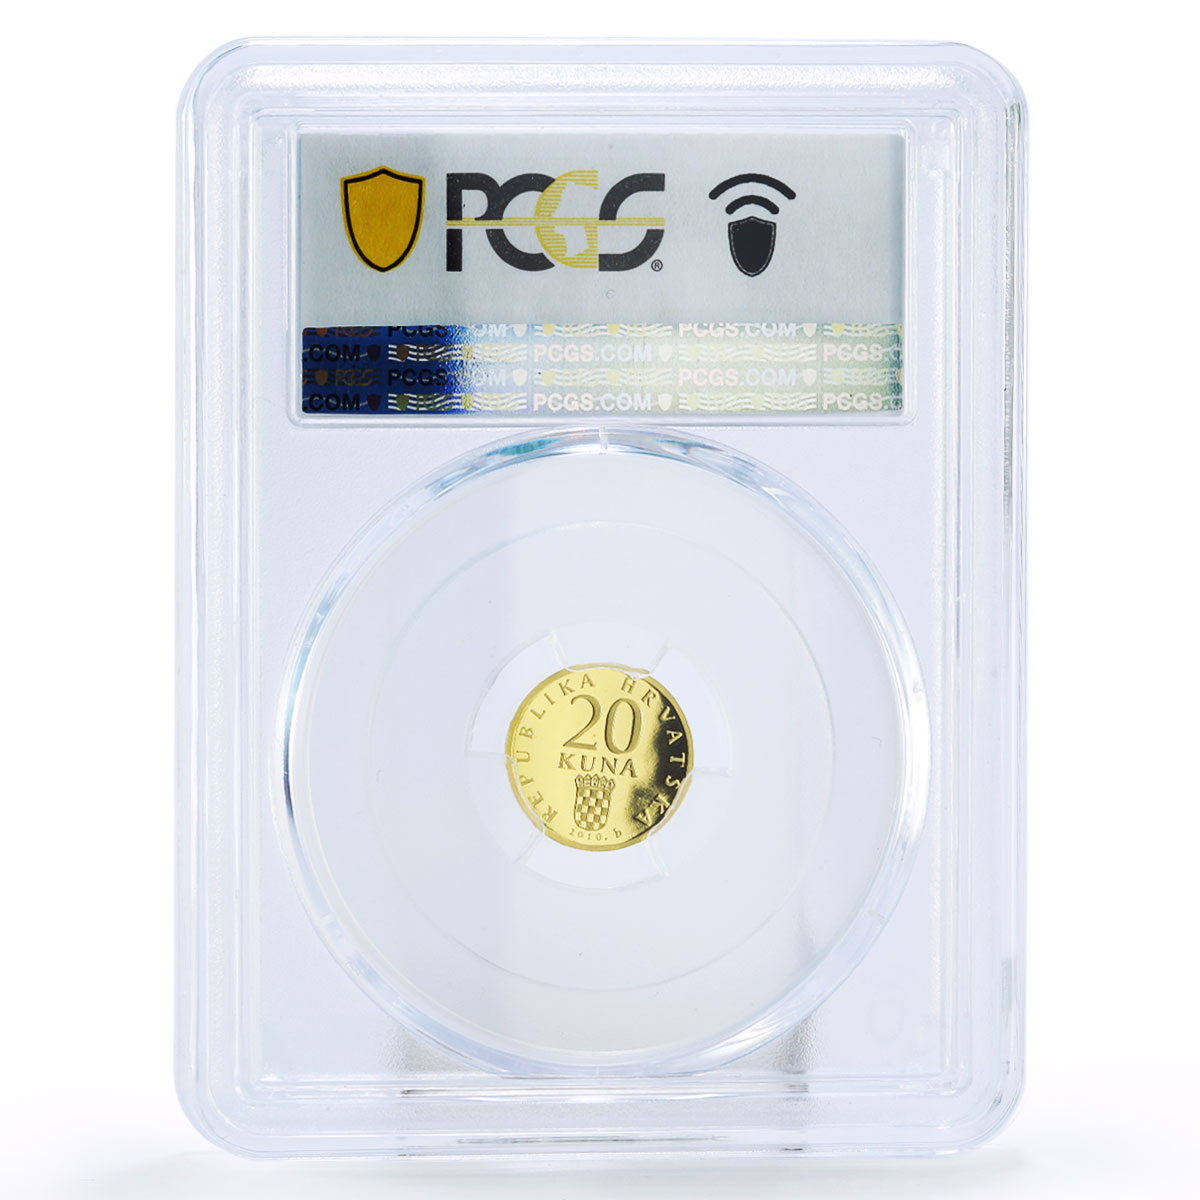 Croatia 20 kuna Coronation King Tomislav Headfacing PR69 PCGS gold coin 2010